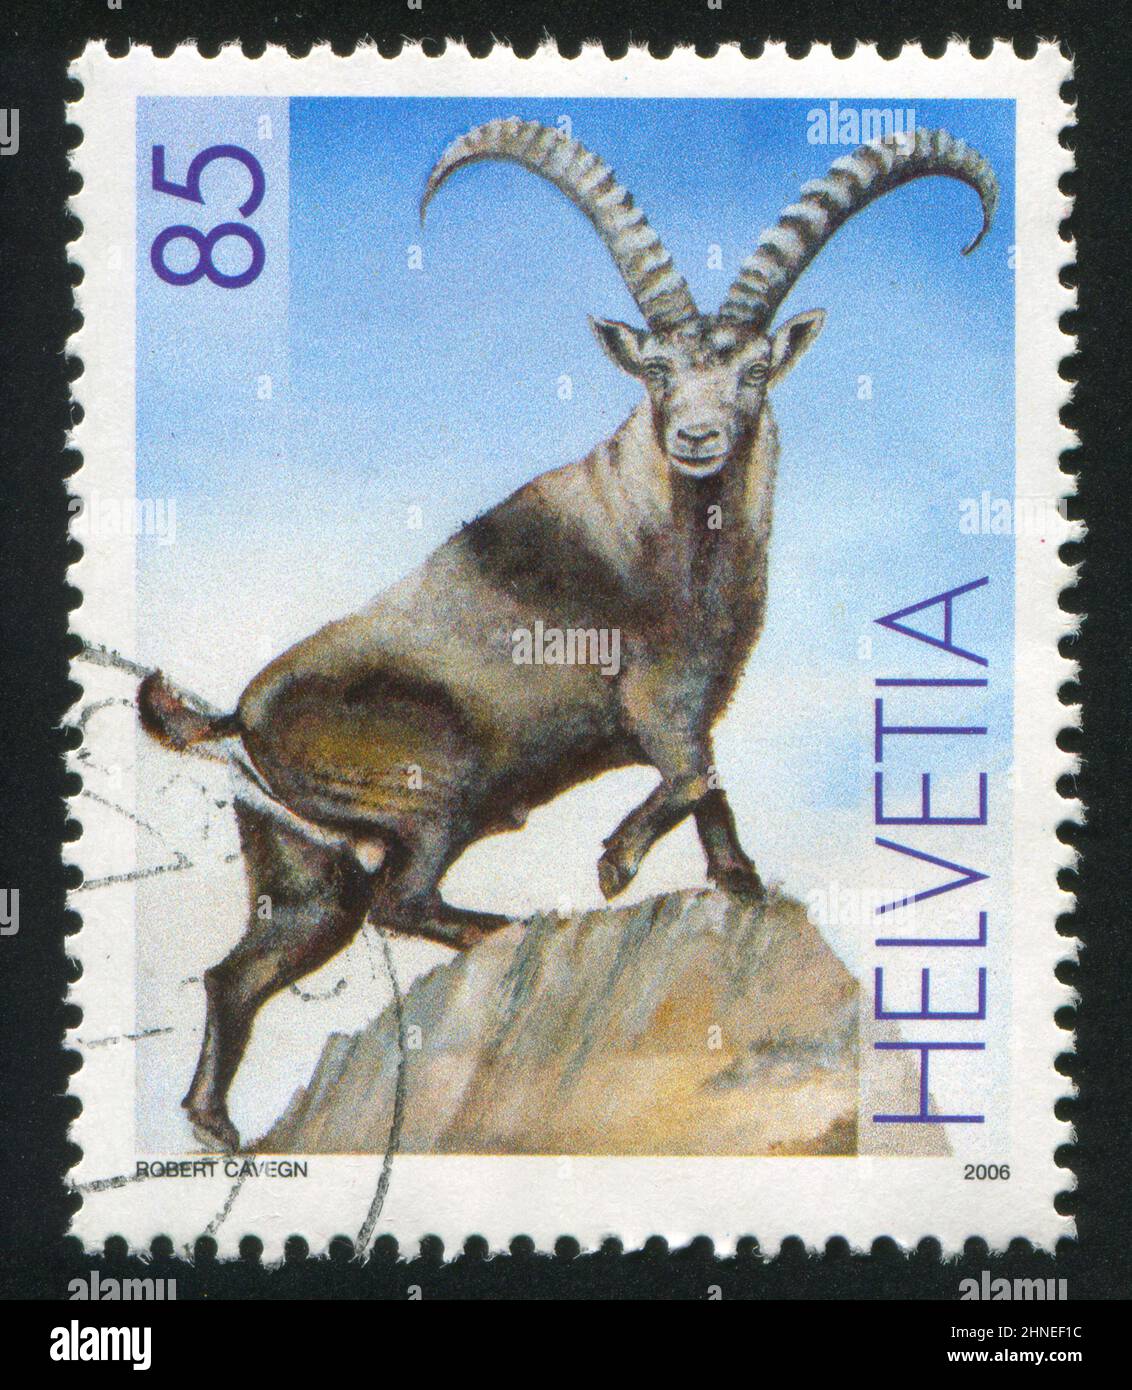 British Alpine Goat рисунок